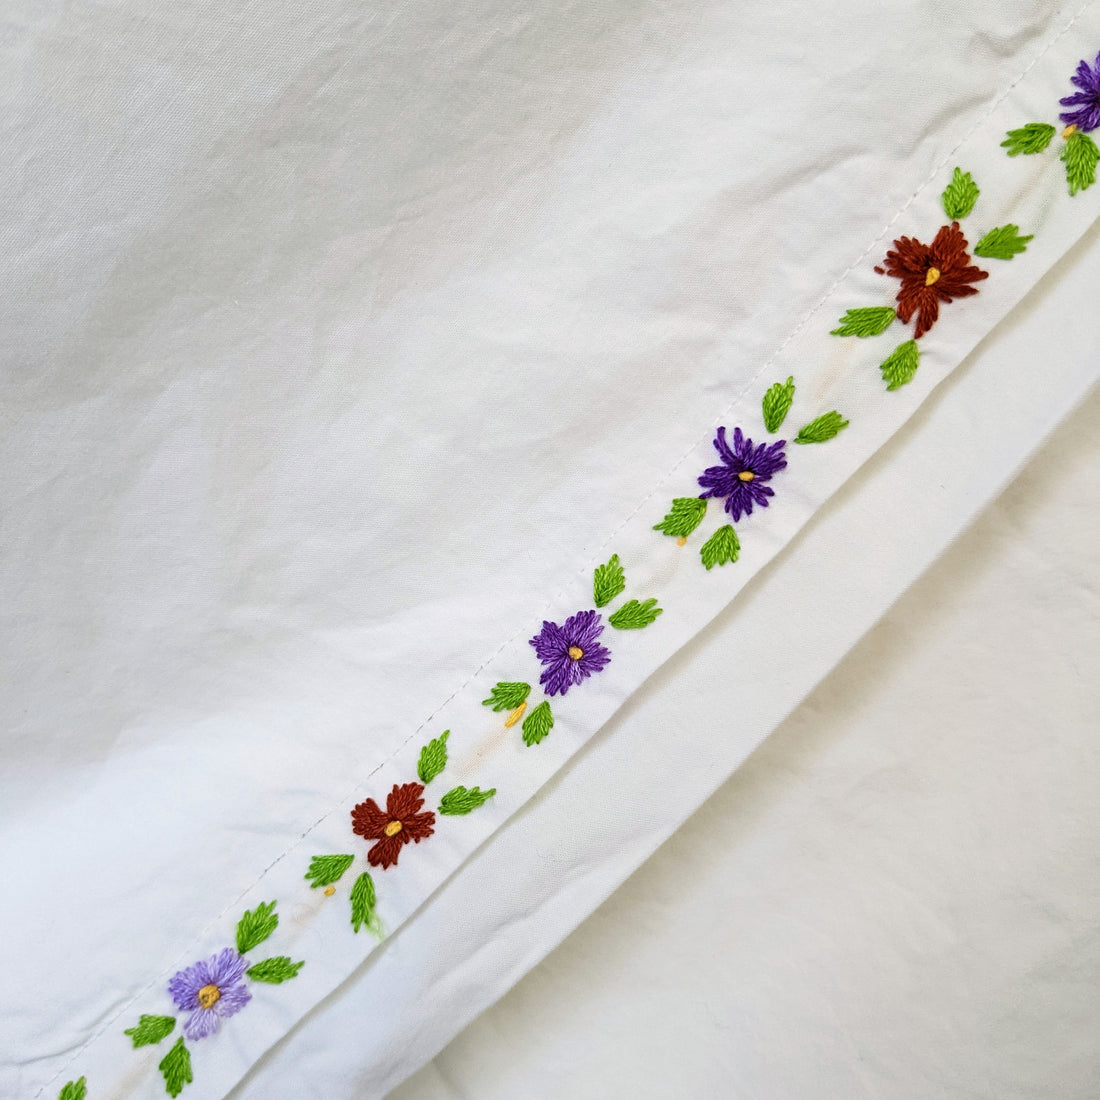 Hand Embroidered Pillowcase - ComfySleep Standard